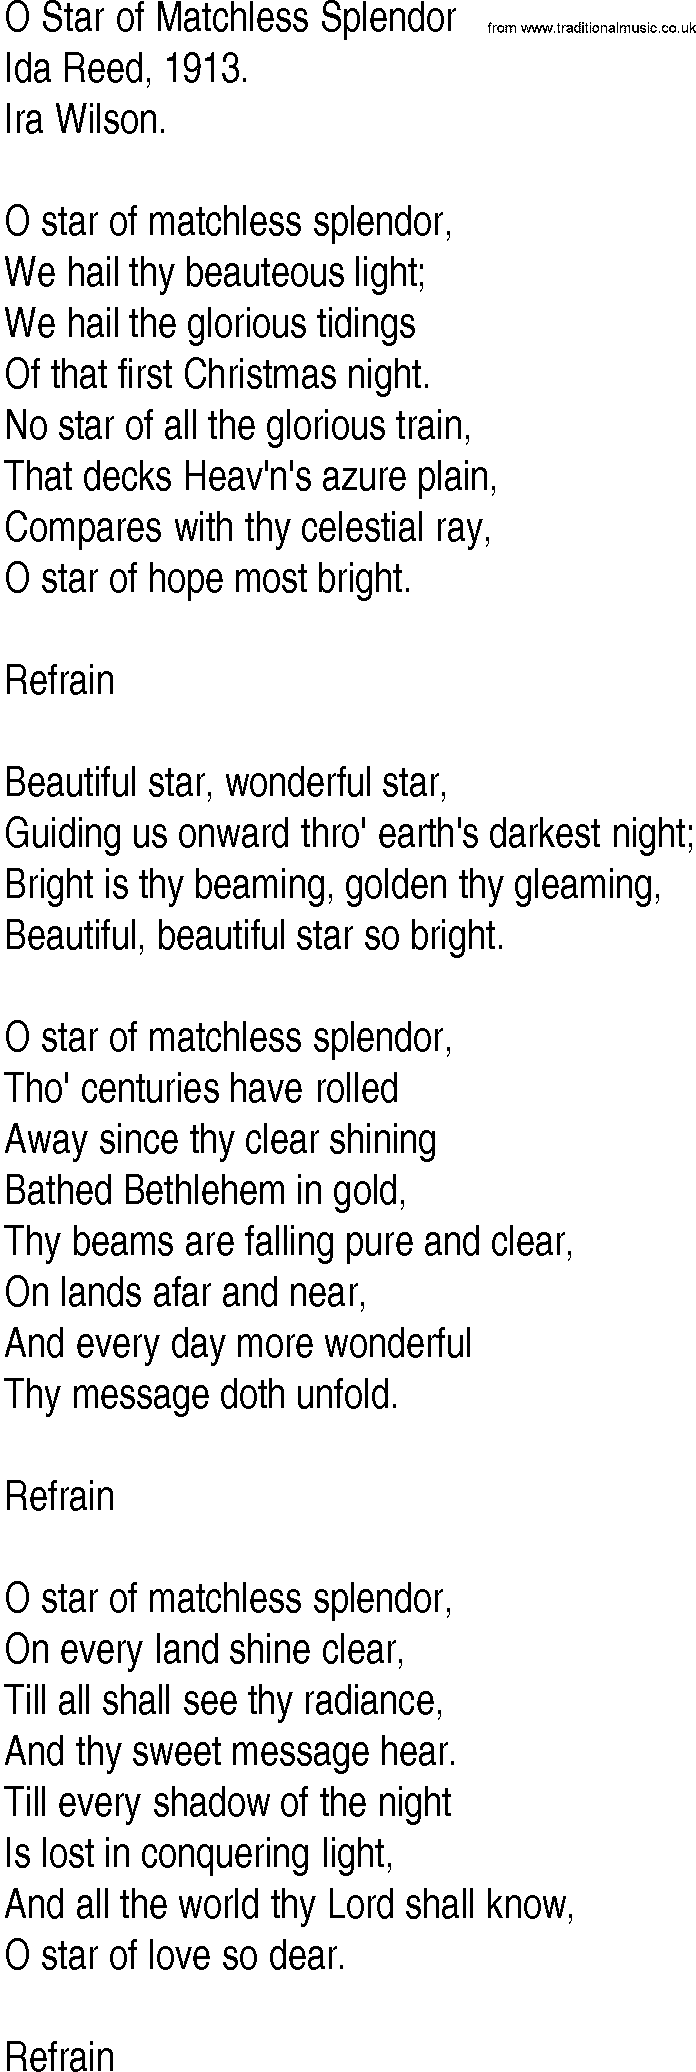 Hymn and Gospel Song: O Star of Matchless Splendor by Ida Reed lyrics